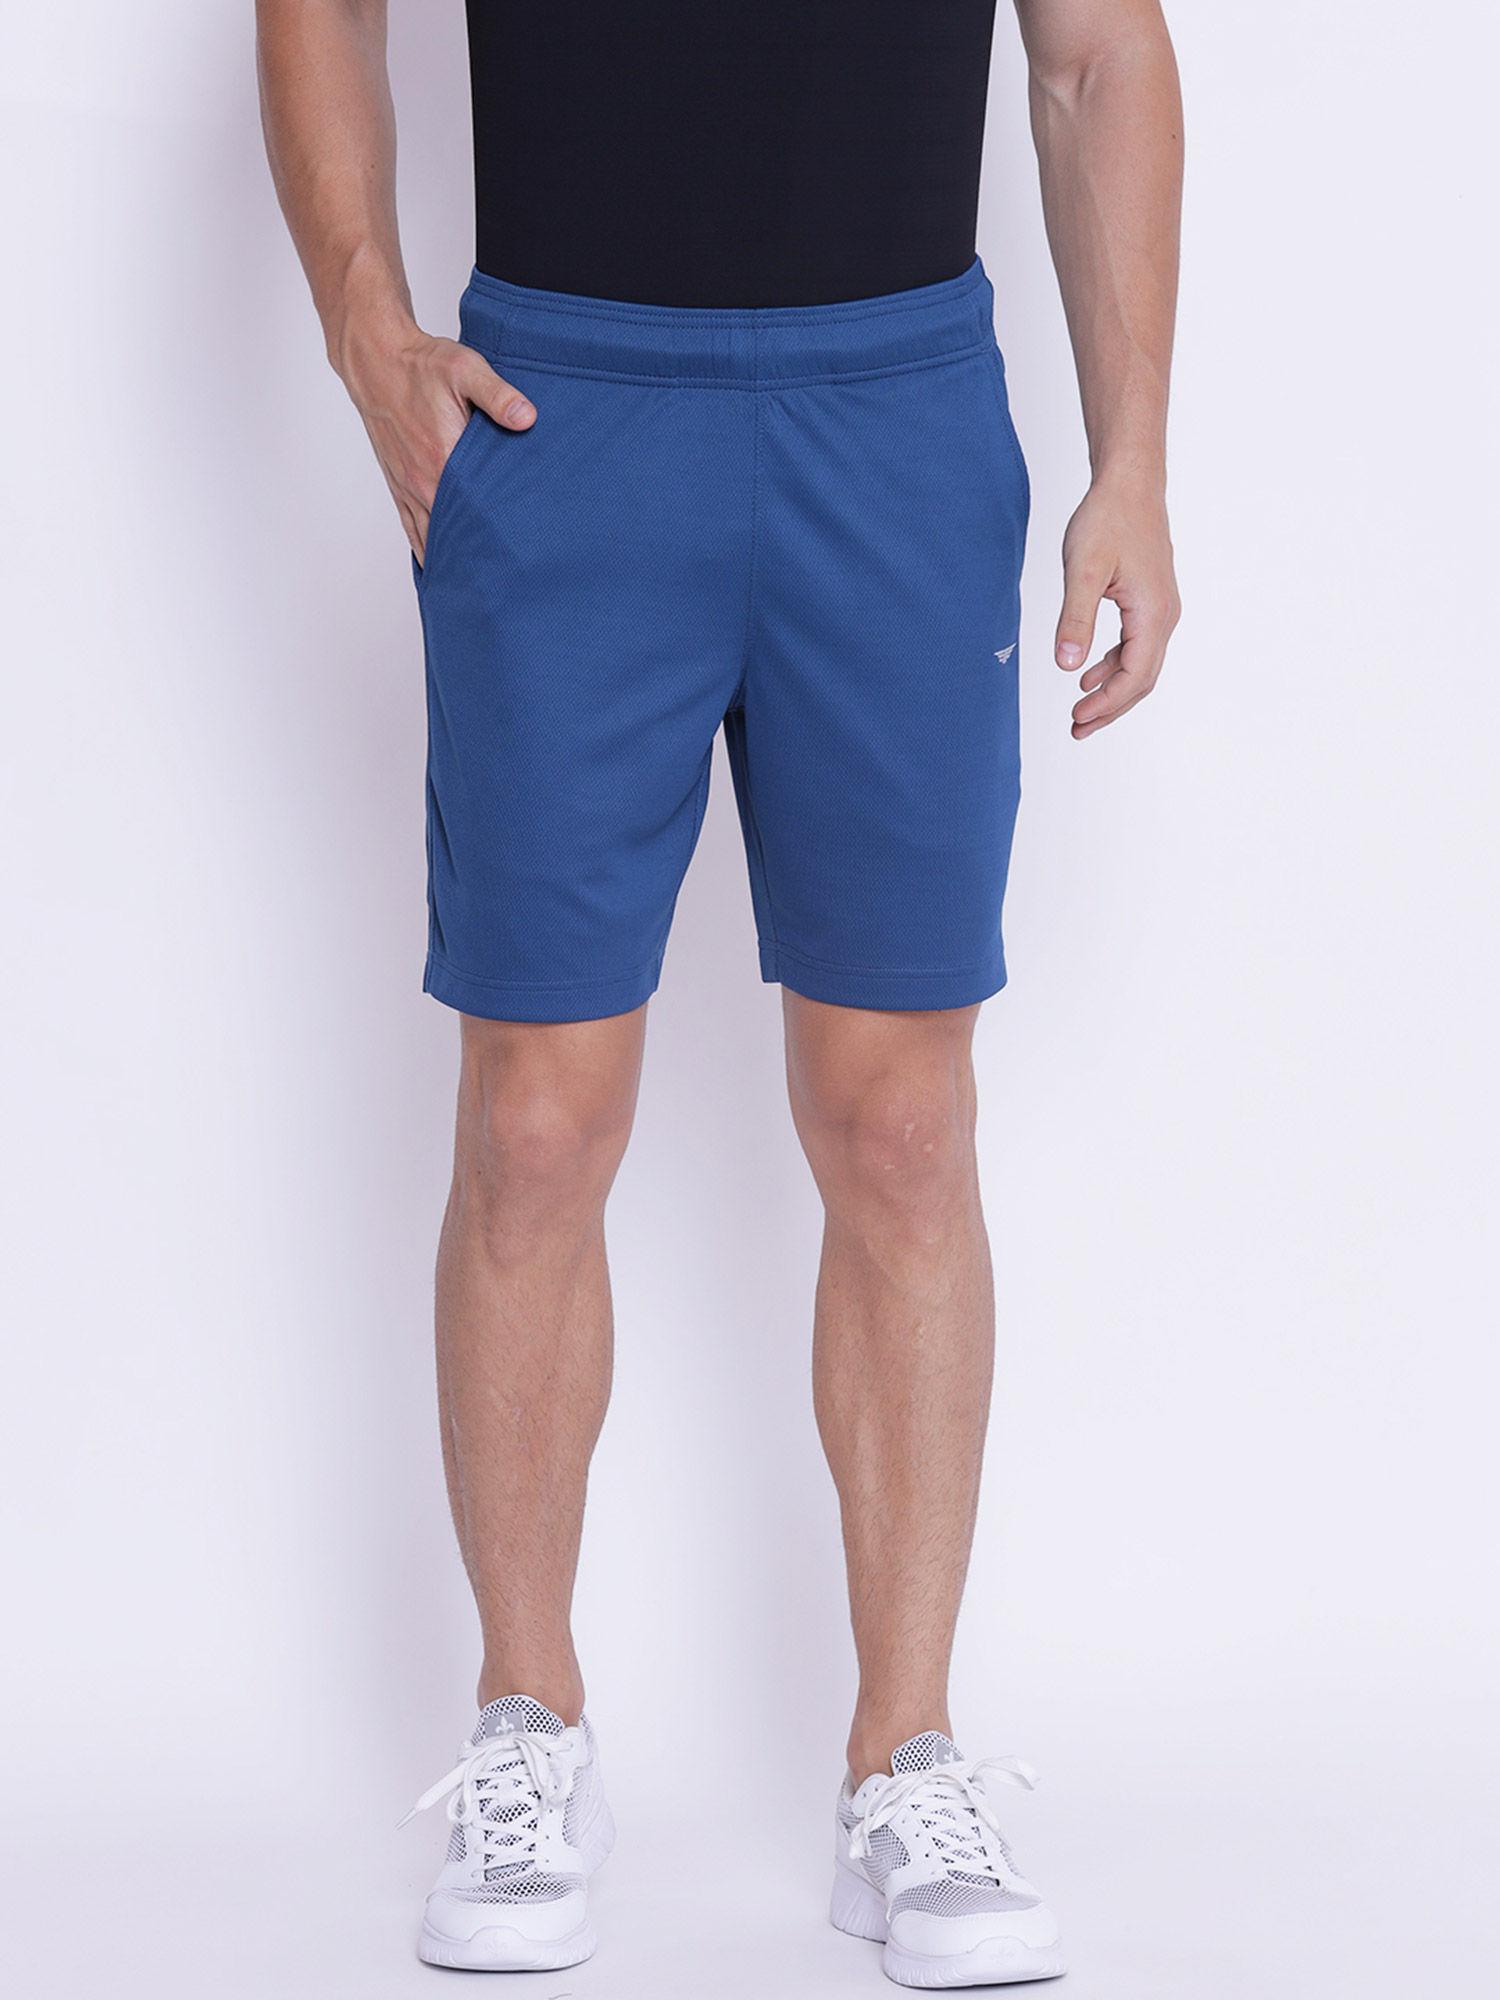 men slate blue active wear shorts